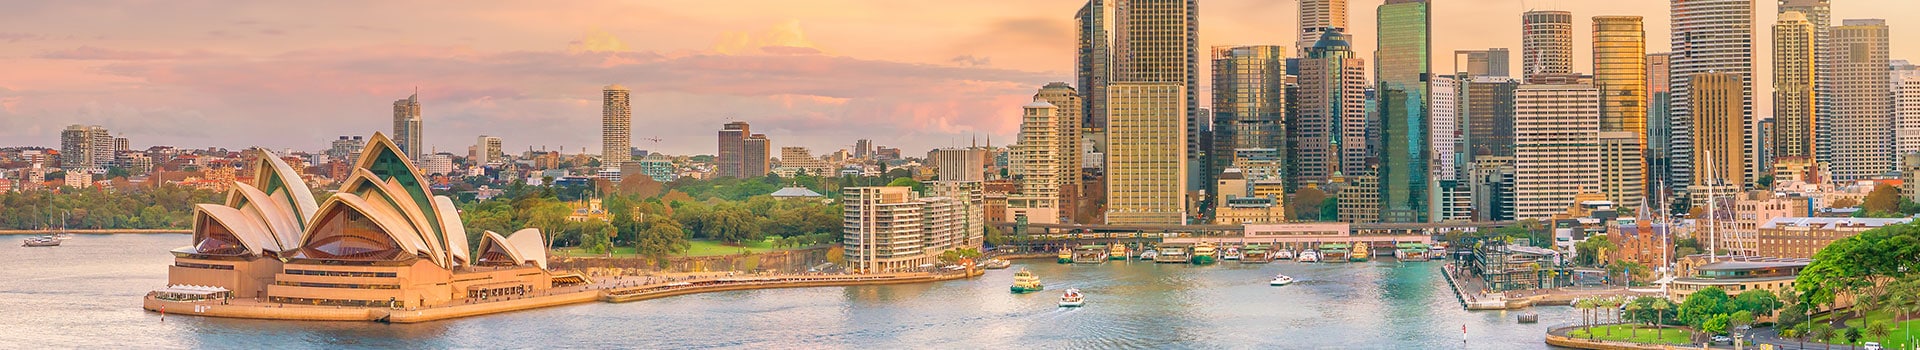 Singapur - Sydney